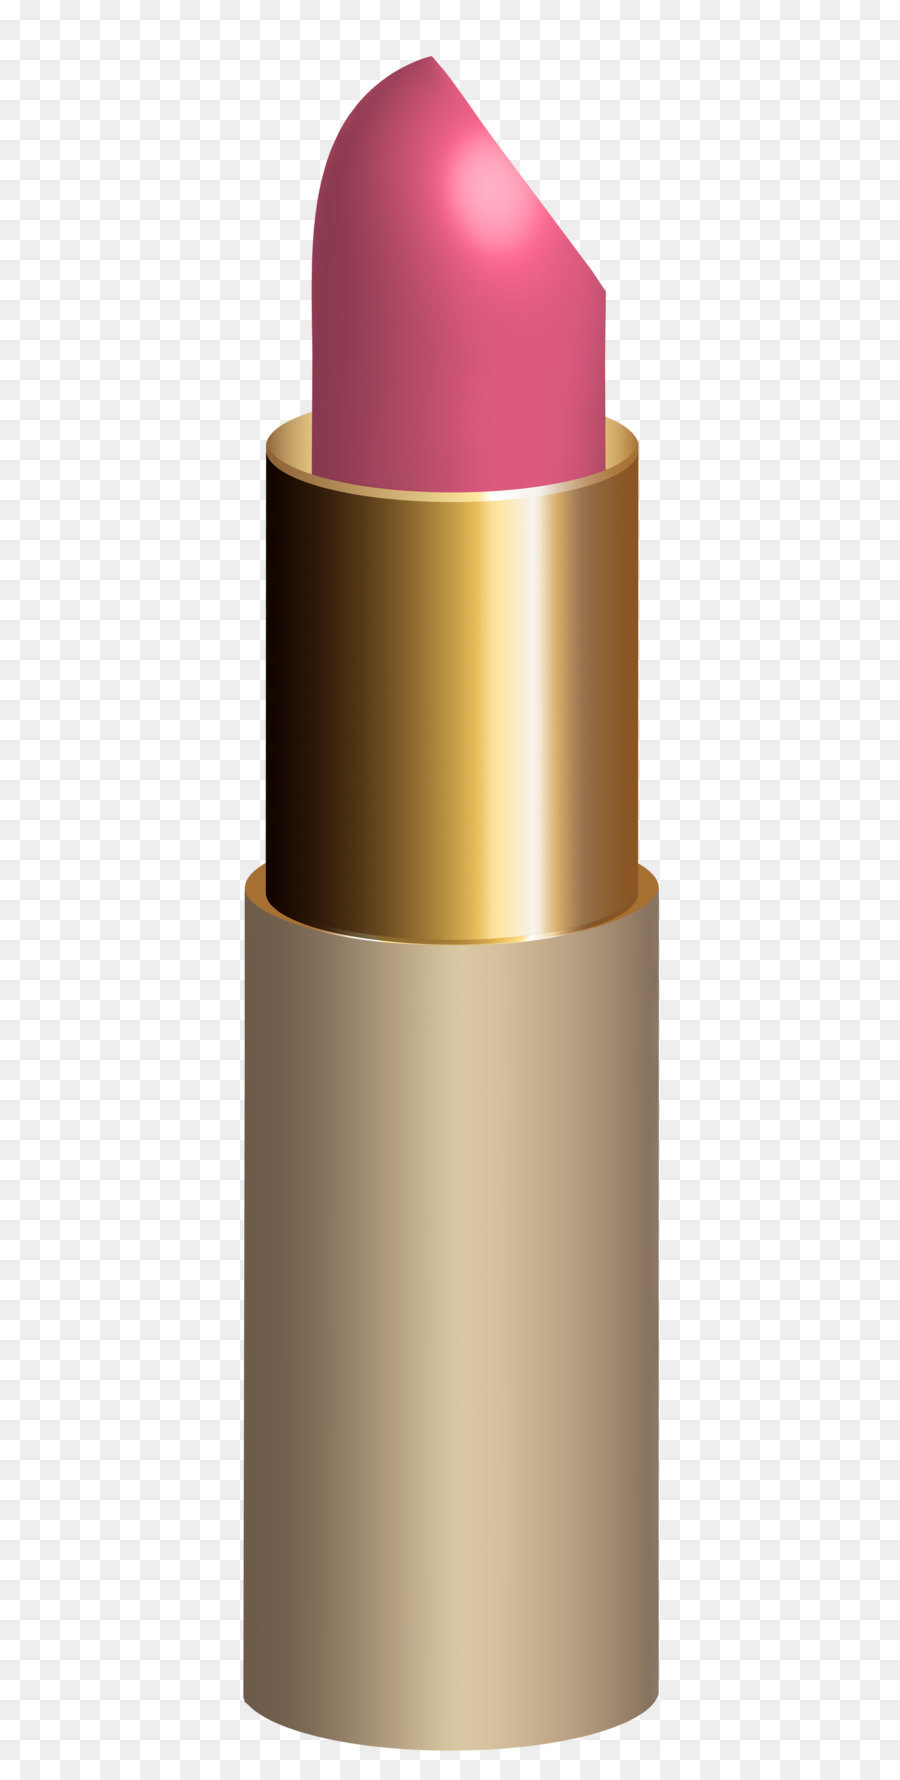 Free Lipstick Clipart Transparent, Download Free Lipstick Clipart ...